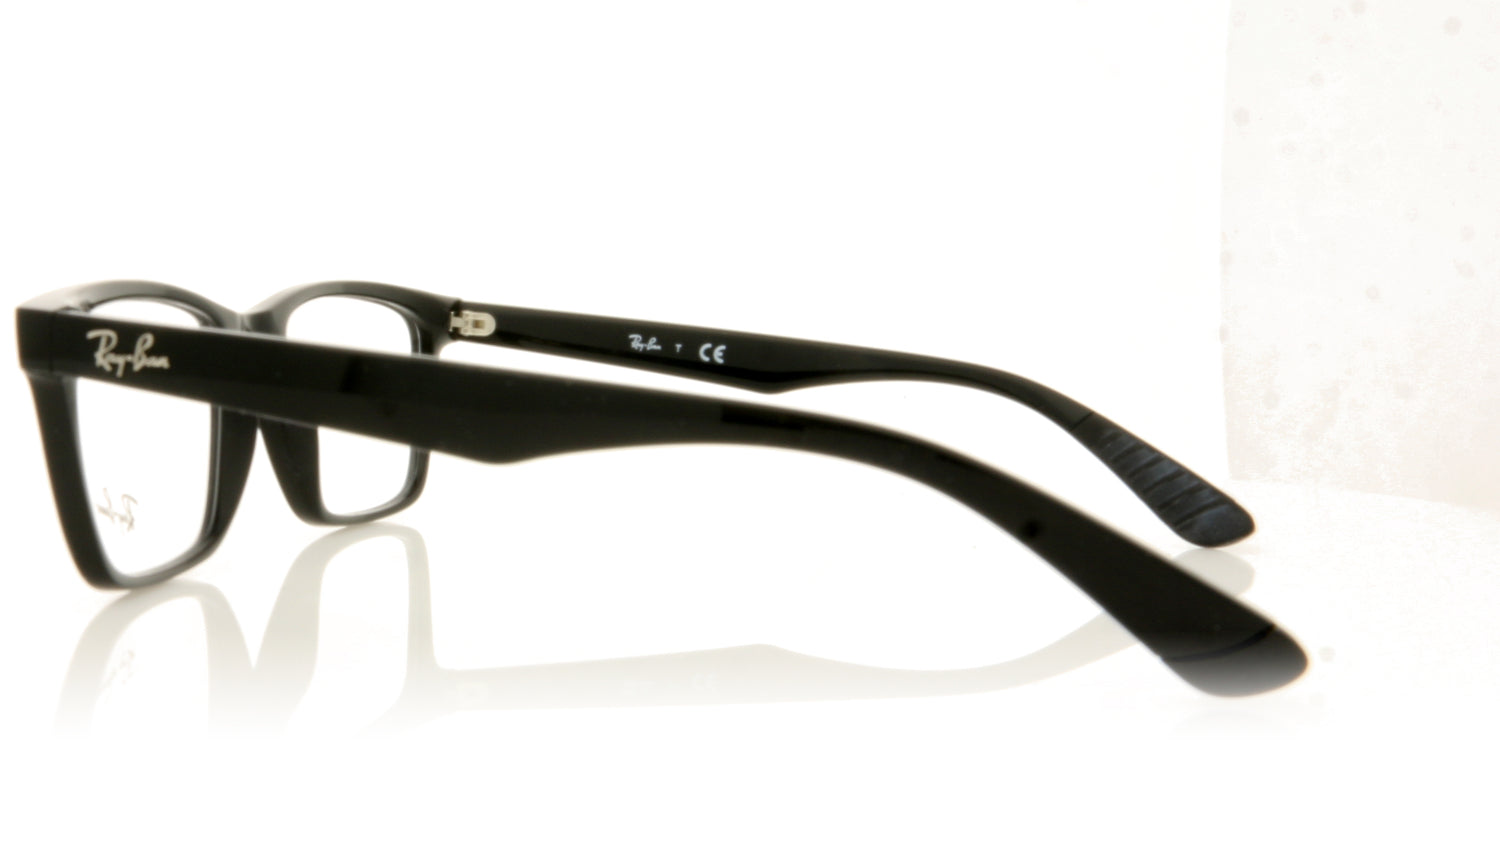 Ray-Ban RB7025 2000 Shiny Black Glasses - Side